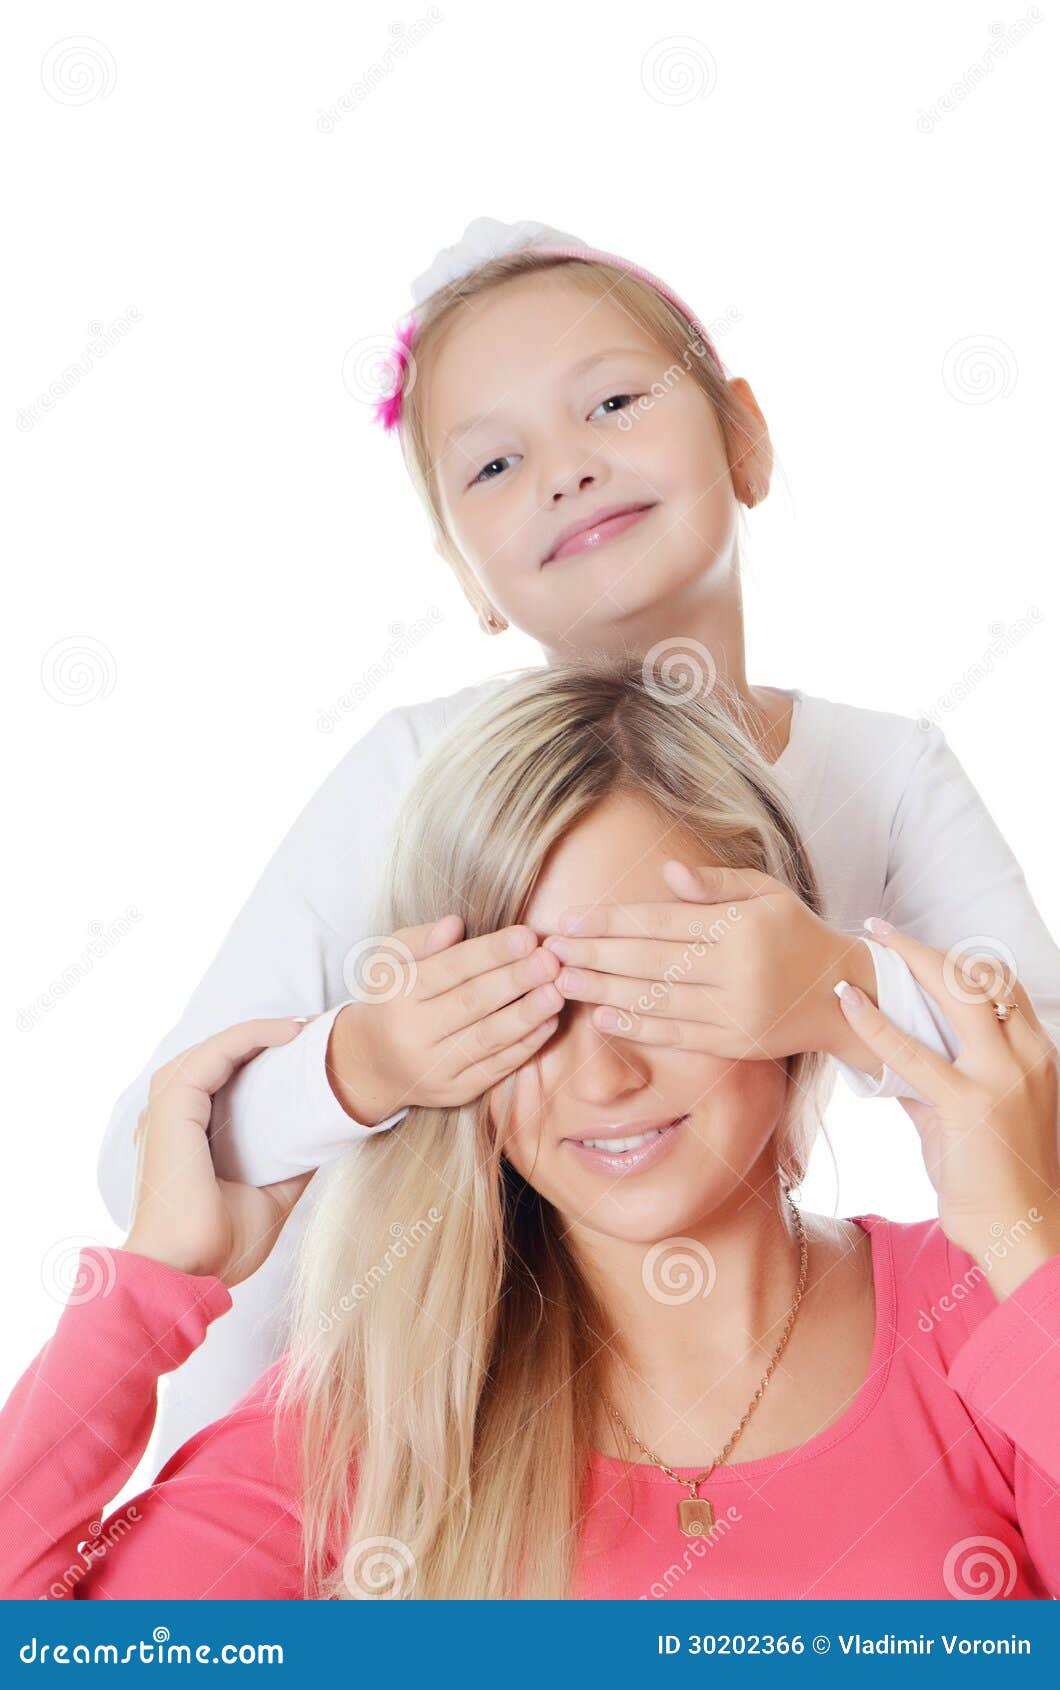 Eye daughter. Мама закрывает руками глаза. Мама закрывает уши ребенку. Мама с закрытыми глазами руками. Девочка с закрытыми глазами руками мамы.